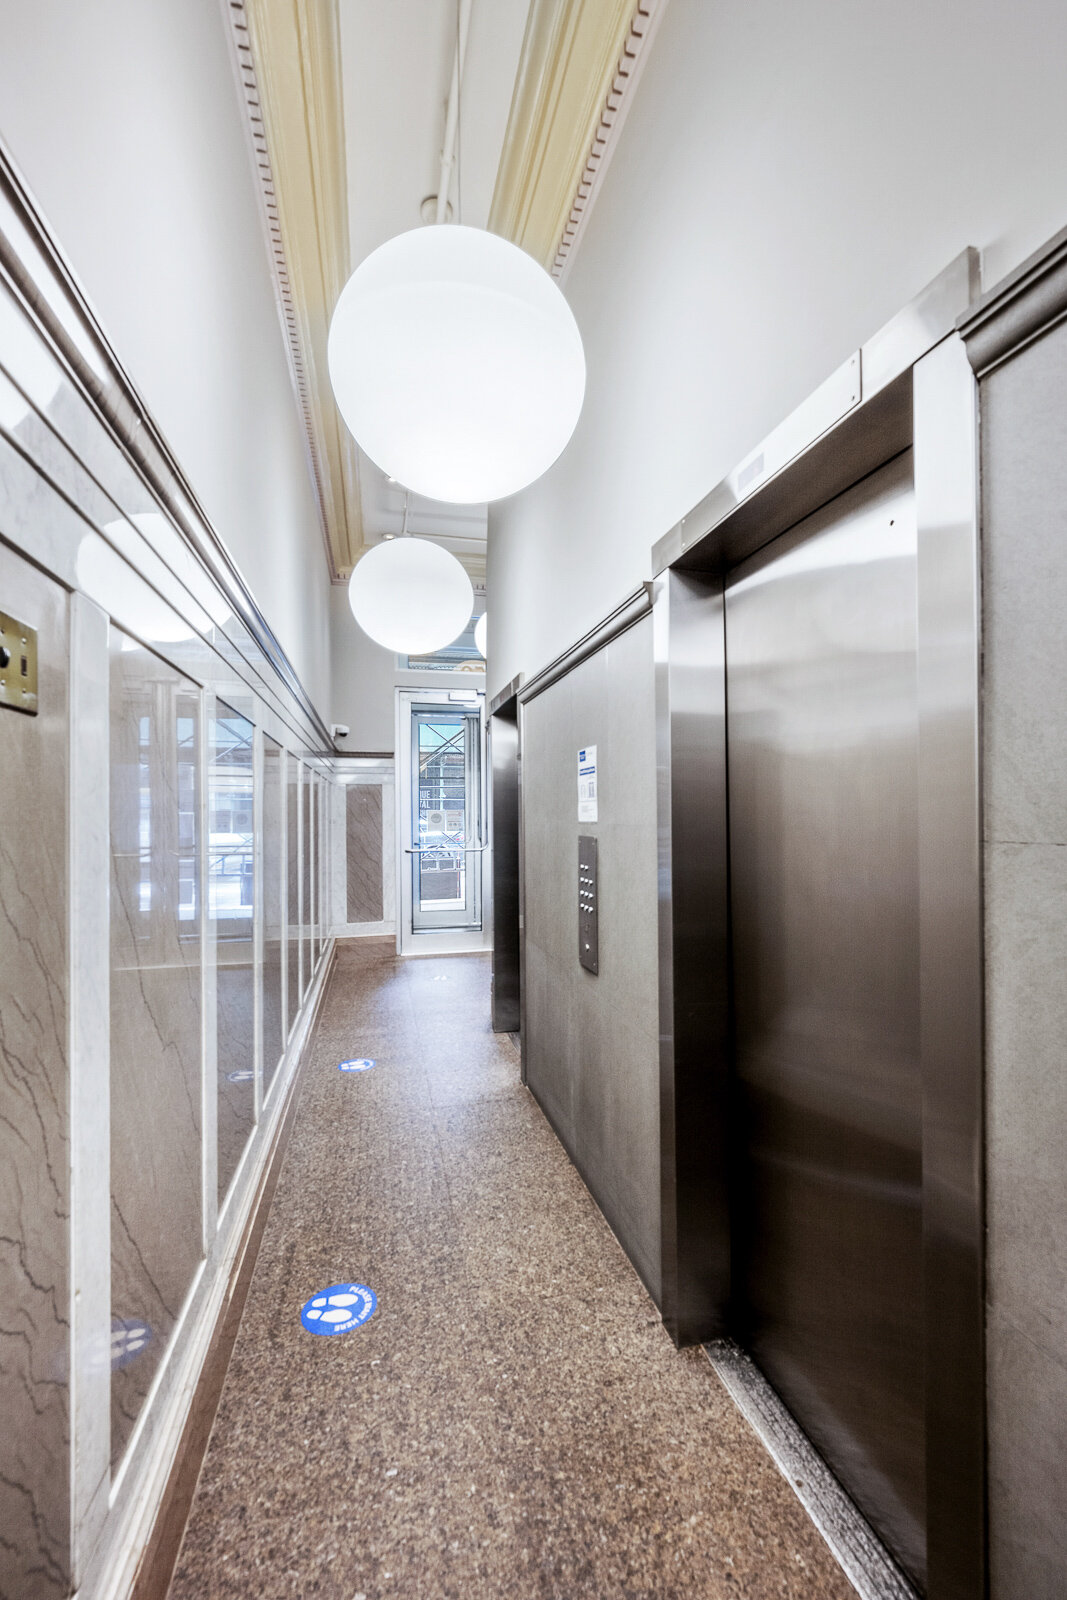 Lobby-Elevator Banks_web.jpg